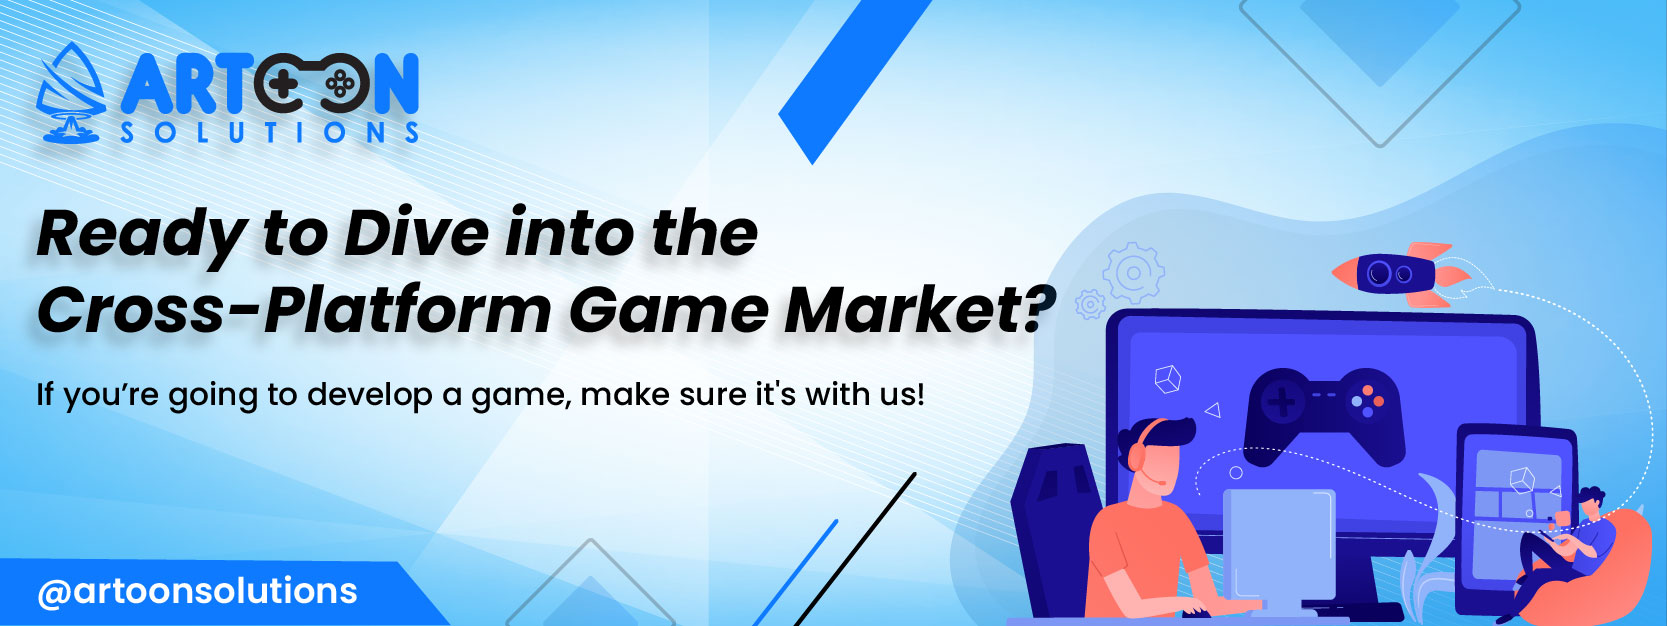 Cross Platform Game Market